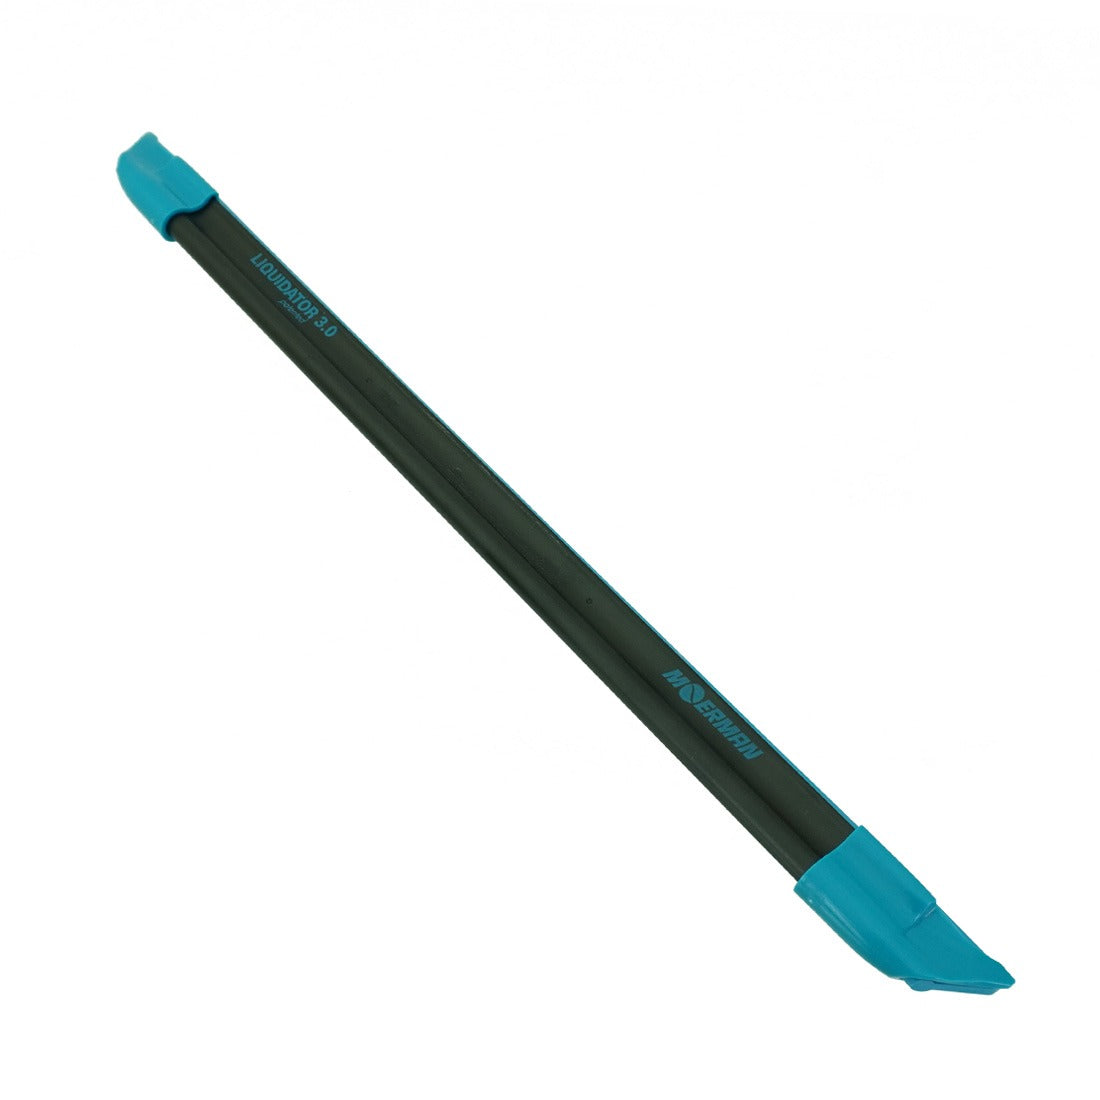 Curva Pen ergonomic writing instrument addresses issues for right